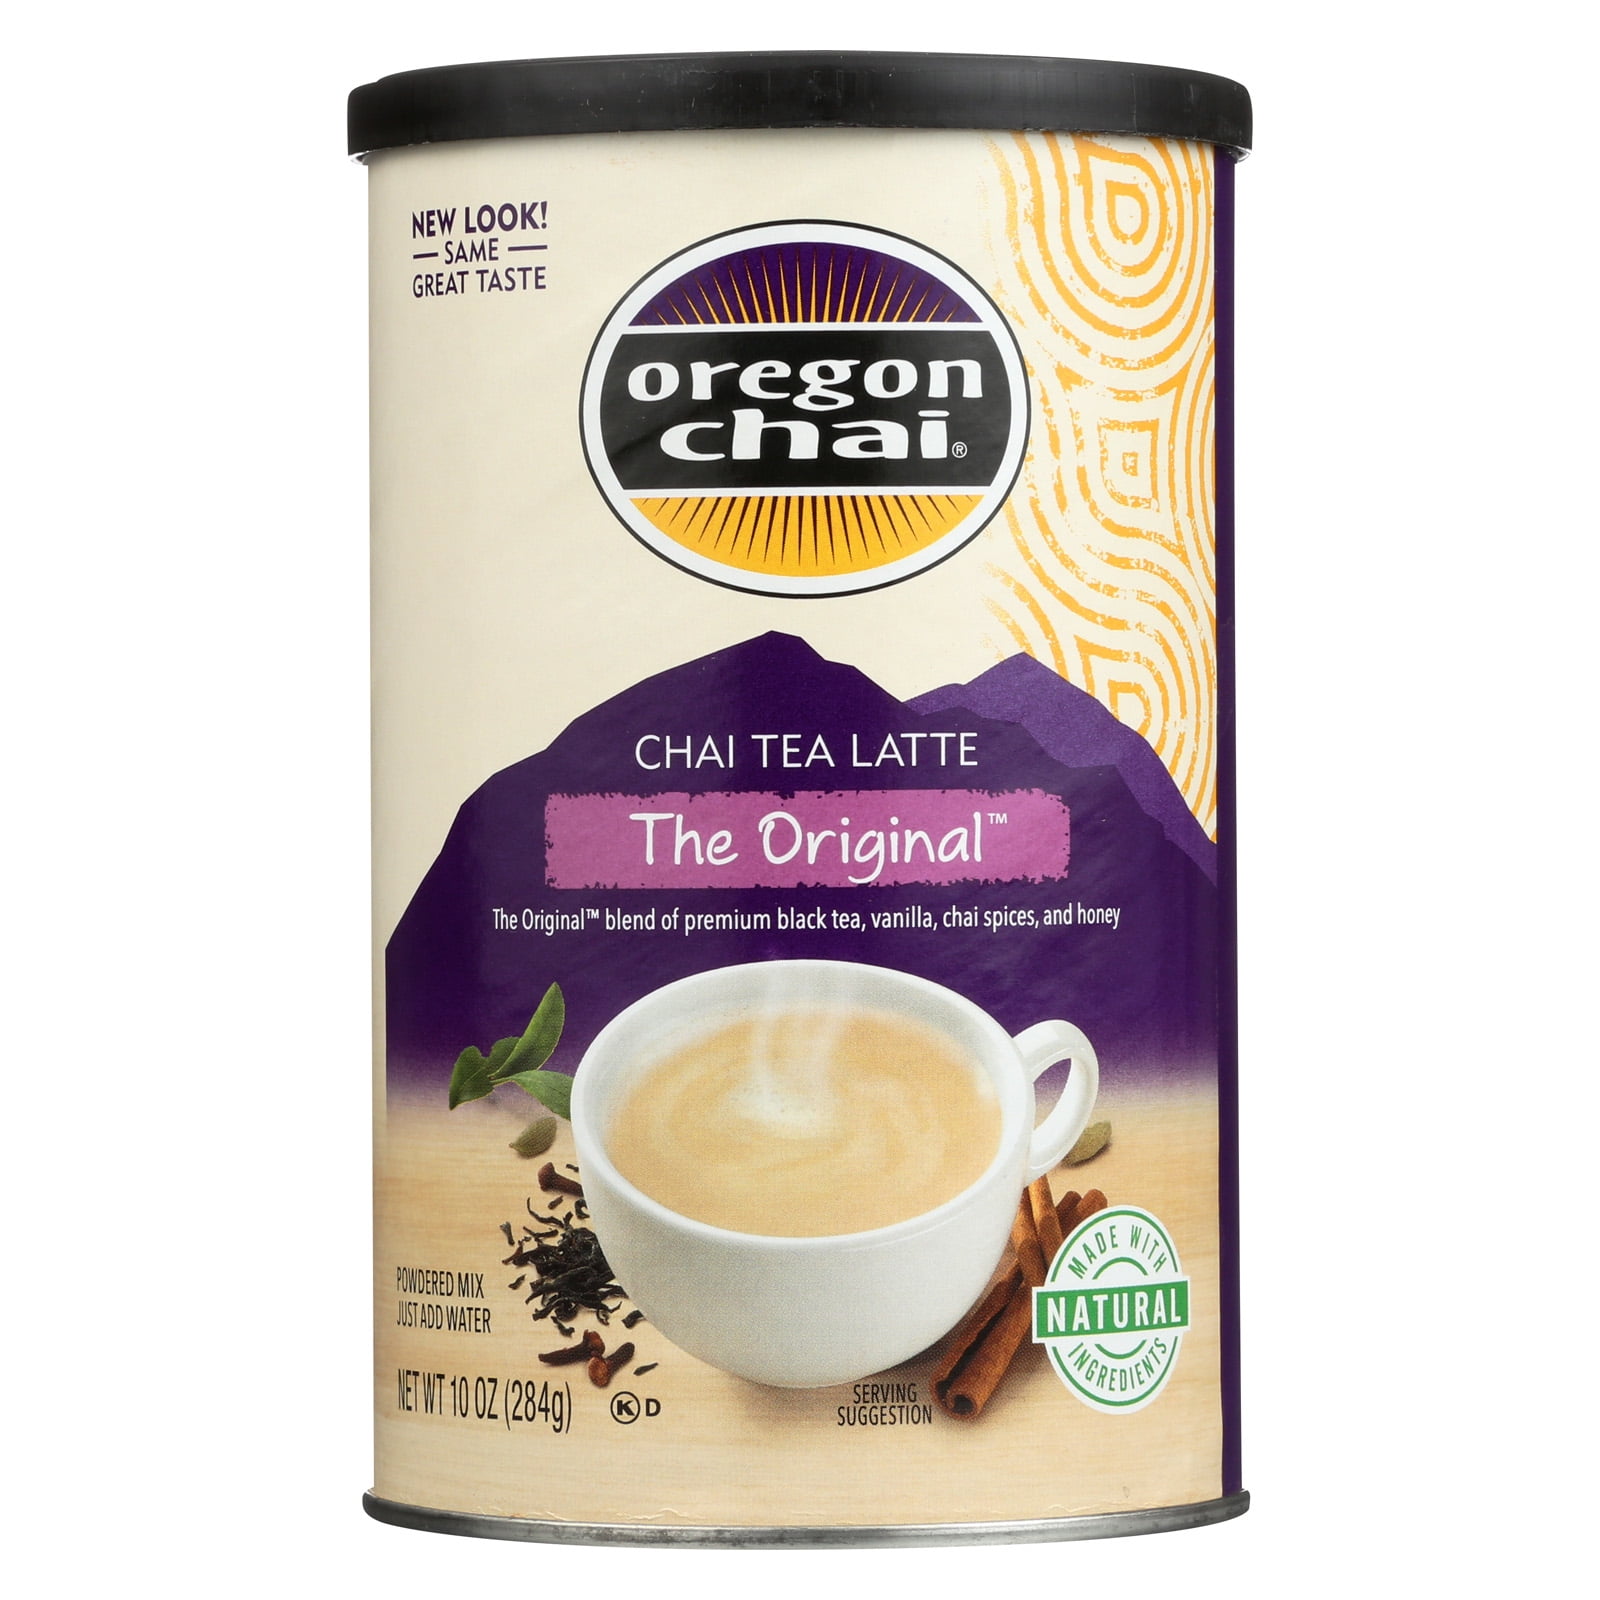 regering identifikation bestikke Oregon Chai Powdered Mix Chai Tea Latte The Original - Walmart.com